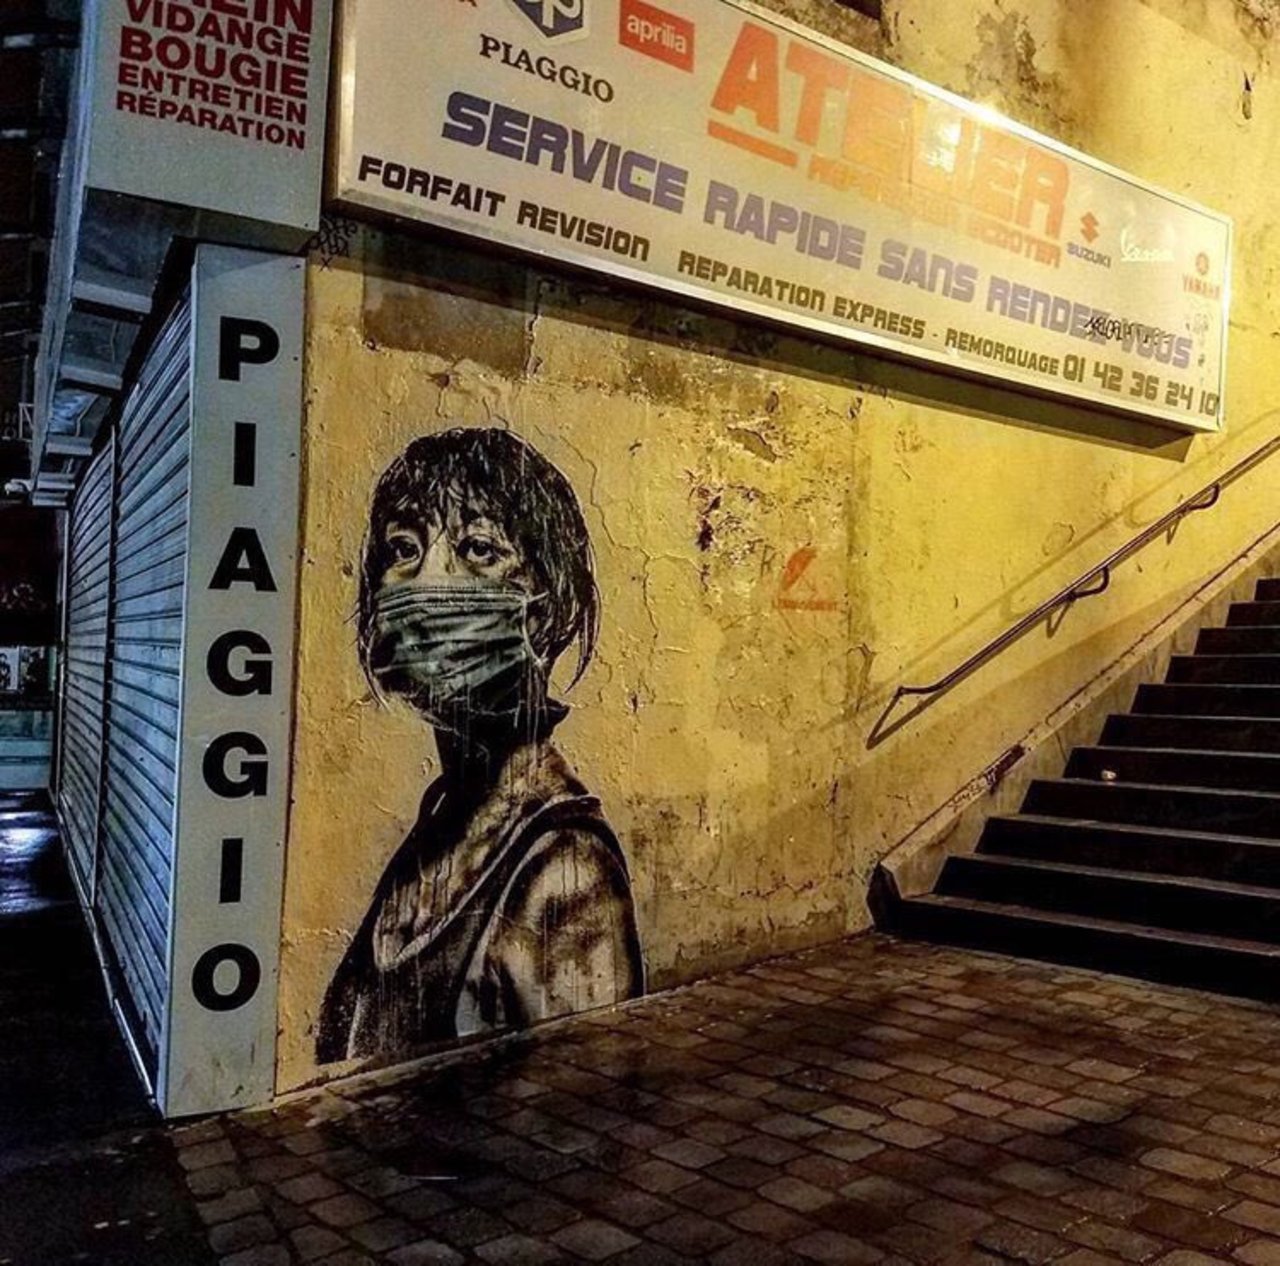 #mural by Eddie Colla #Paris #France #art #graffiti #streetart https://t.co/aHV7ptNadE